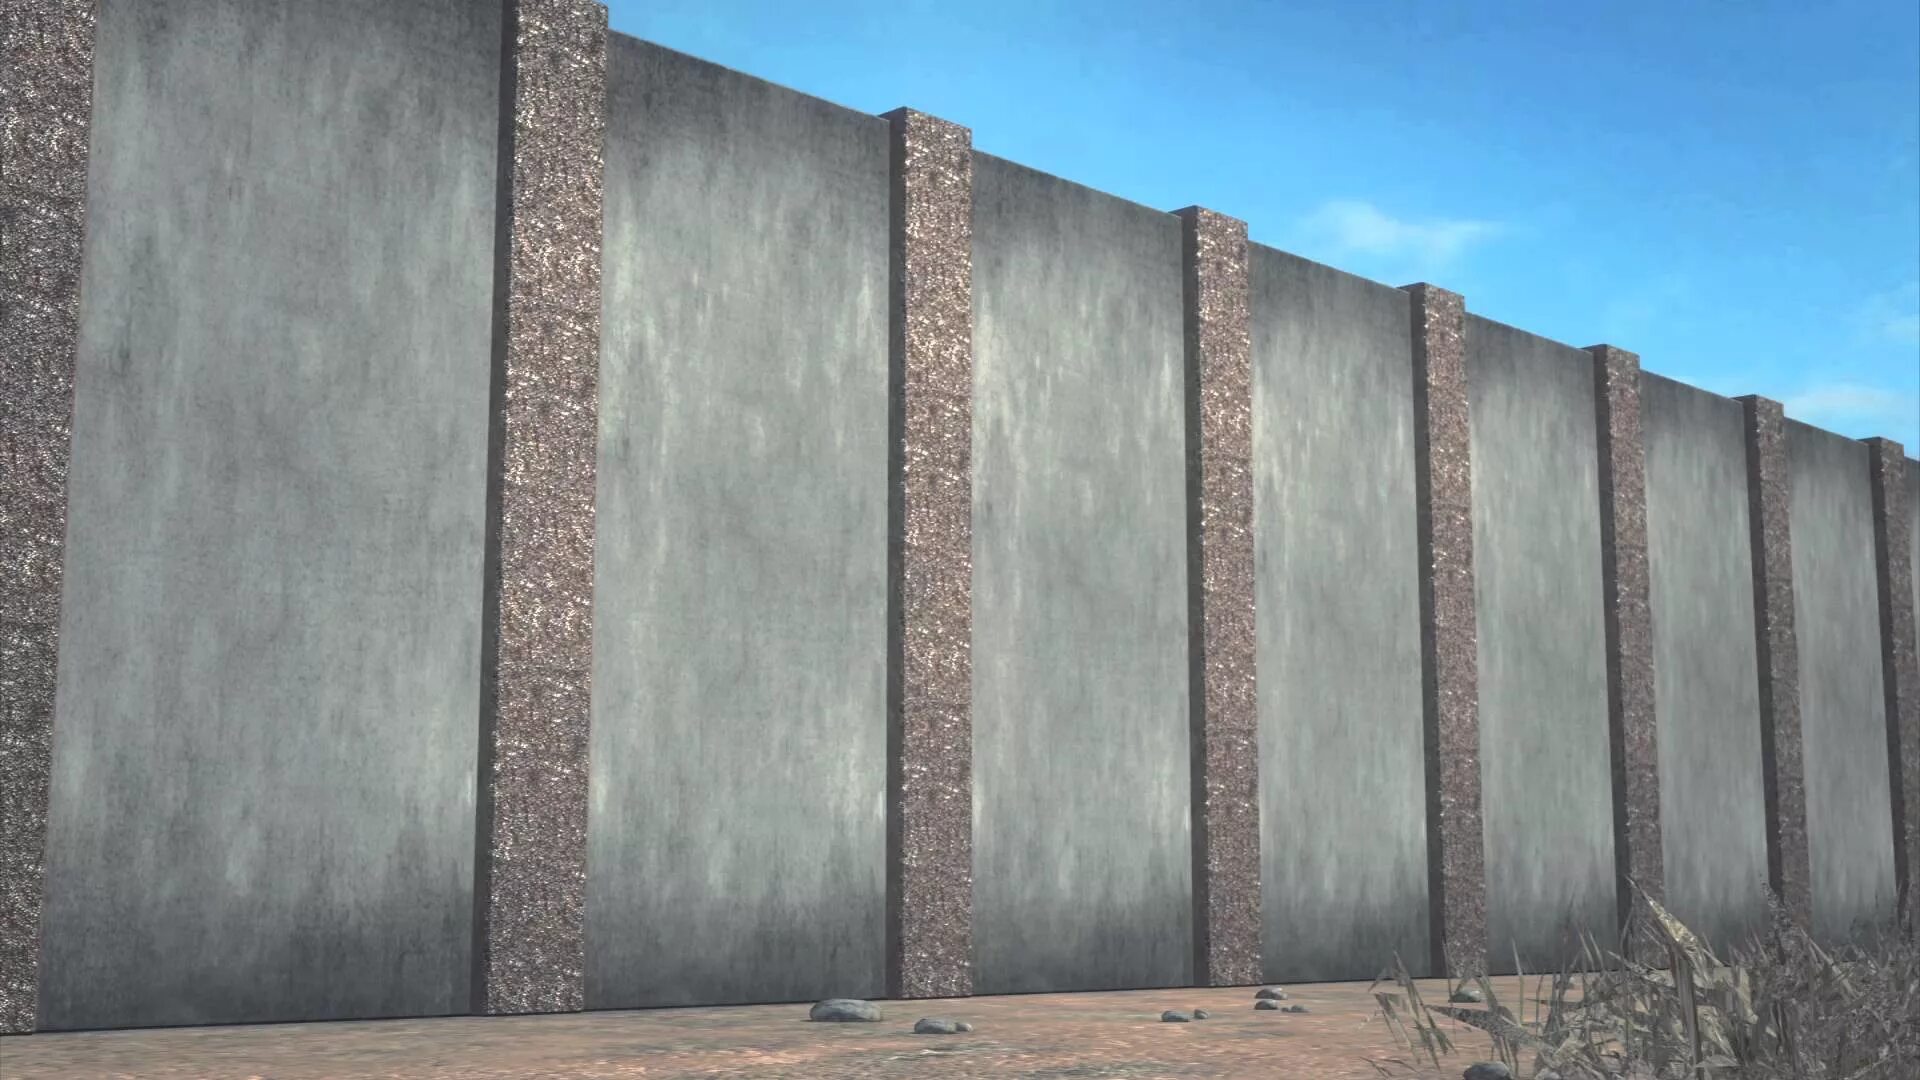 Стоит огромная стена. Огромная стена. Бетонная стена. Высокая стена. Высокая бетонная стена.